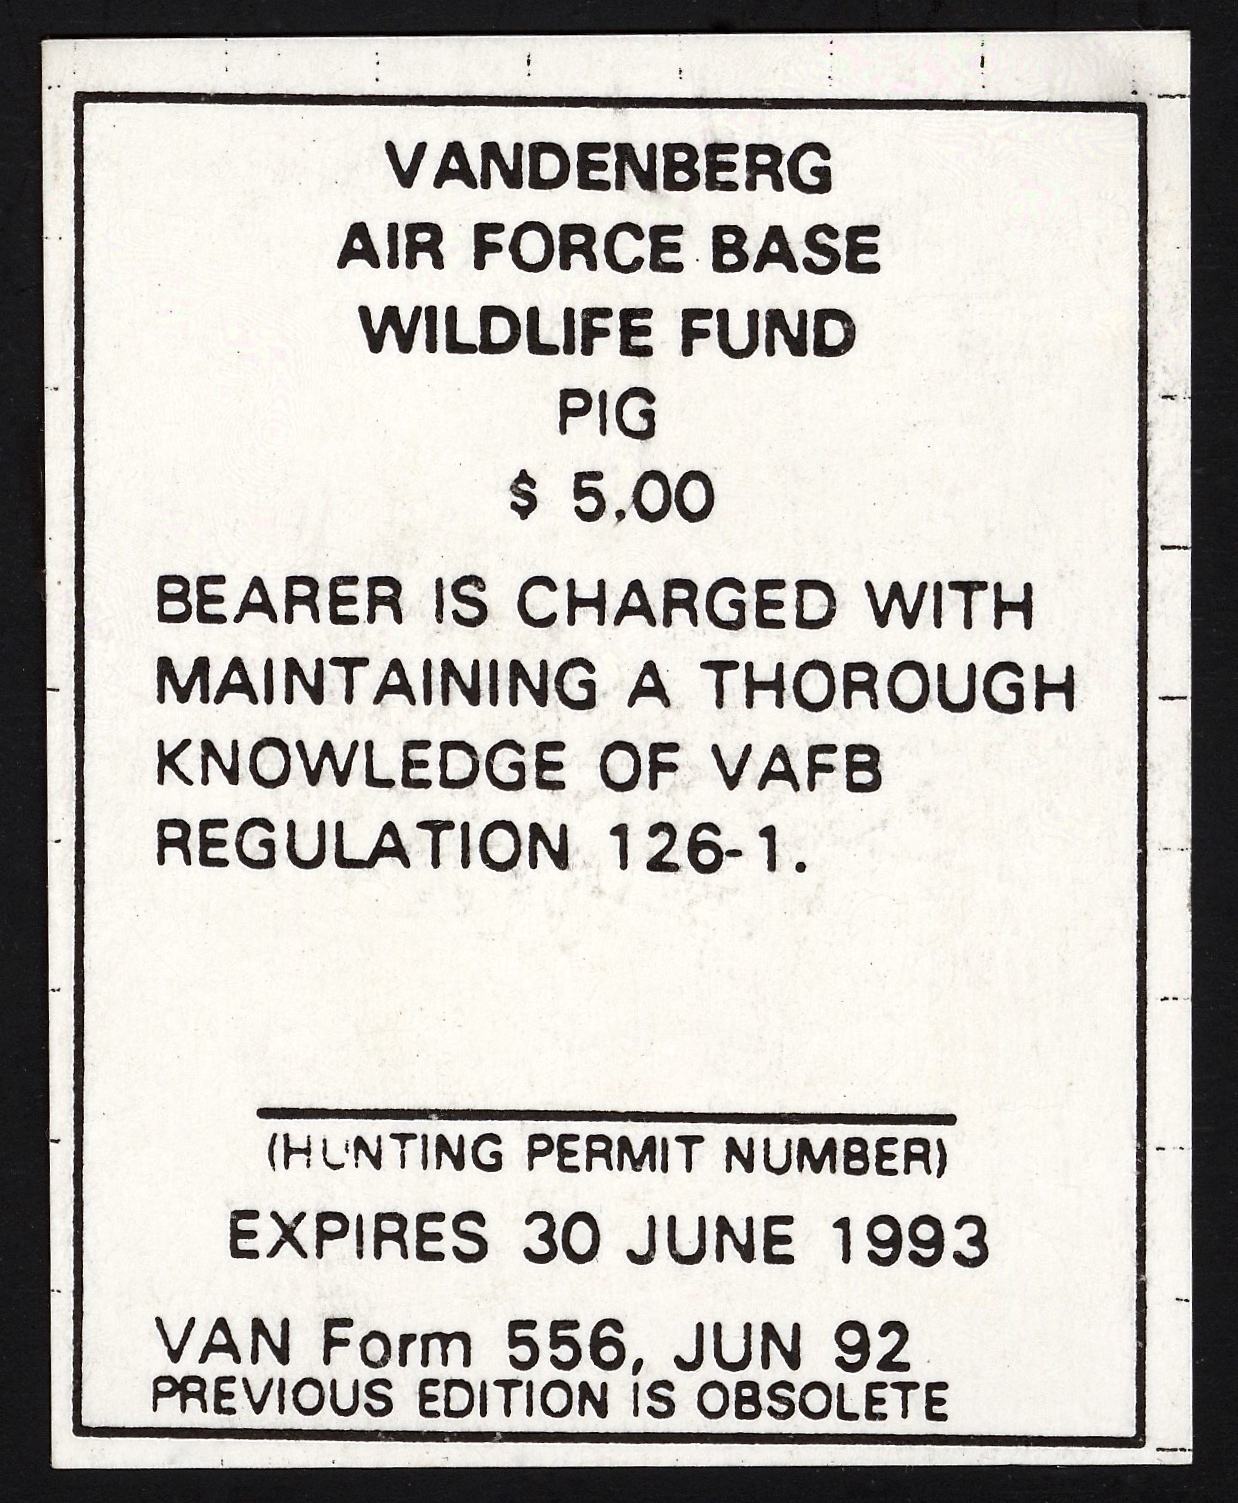 1992-93 VAFB Pig